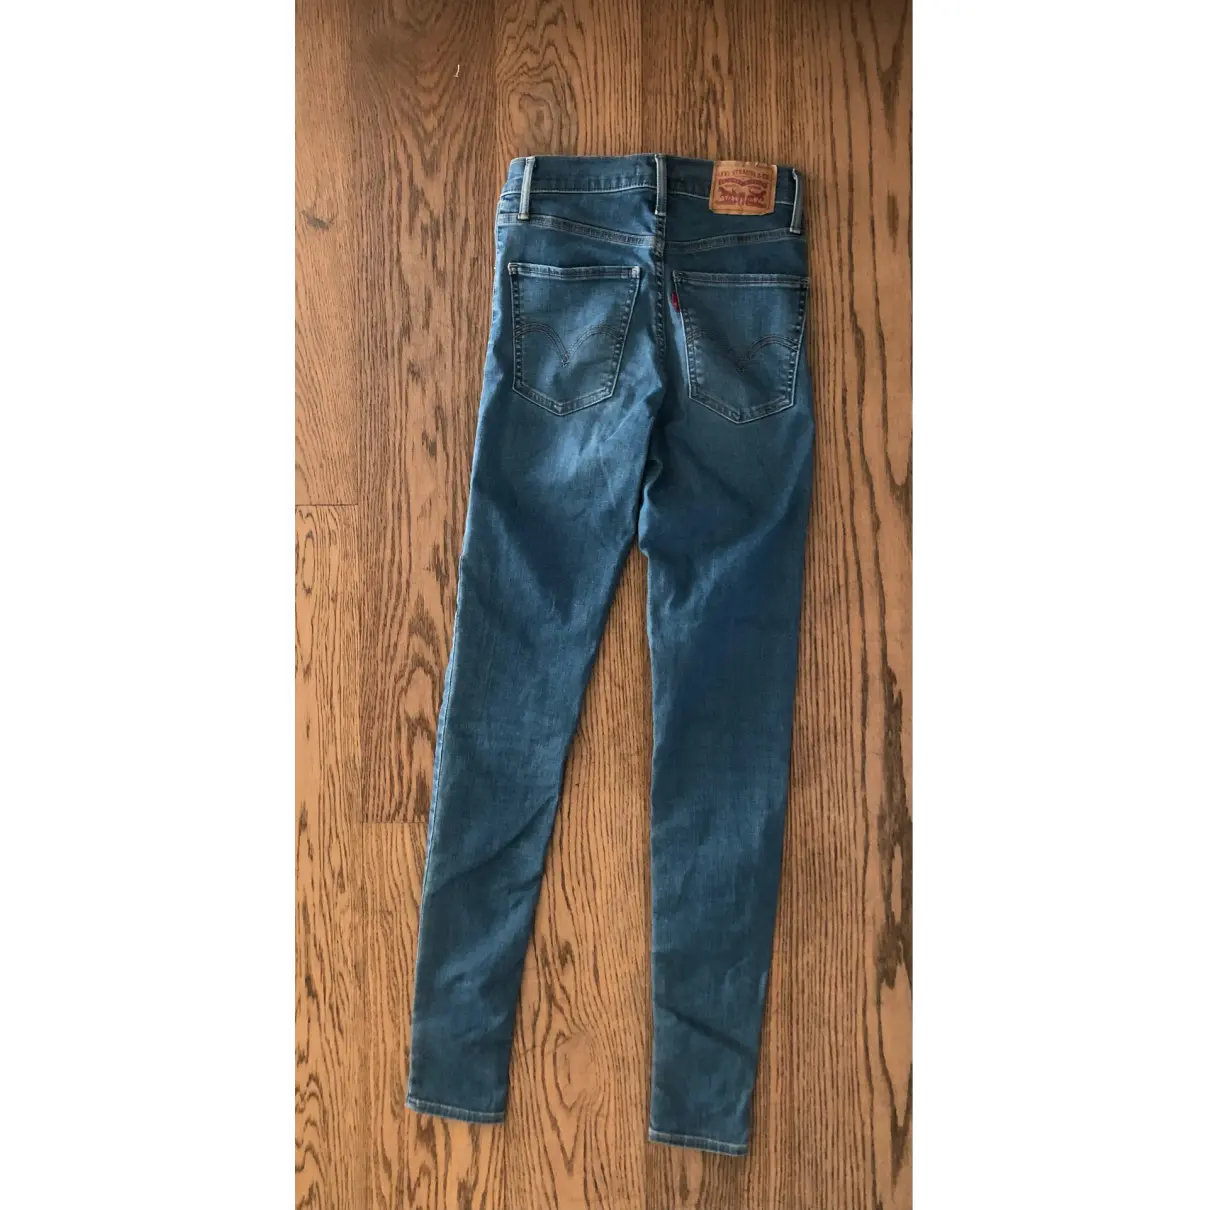 Buy Levi's 721 slim jeans online